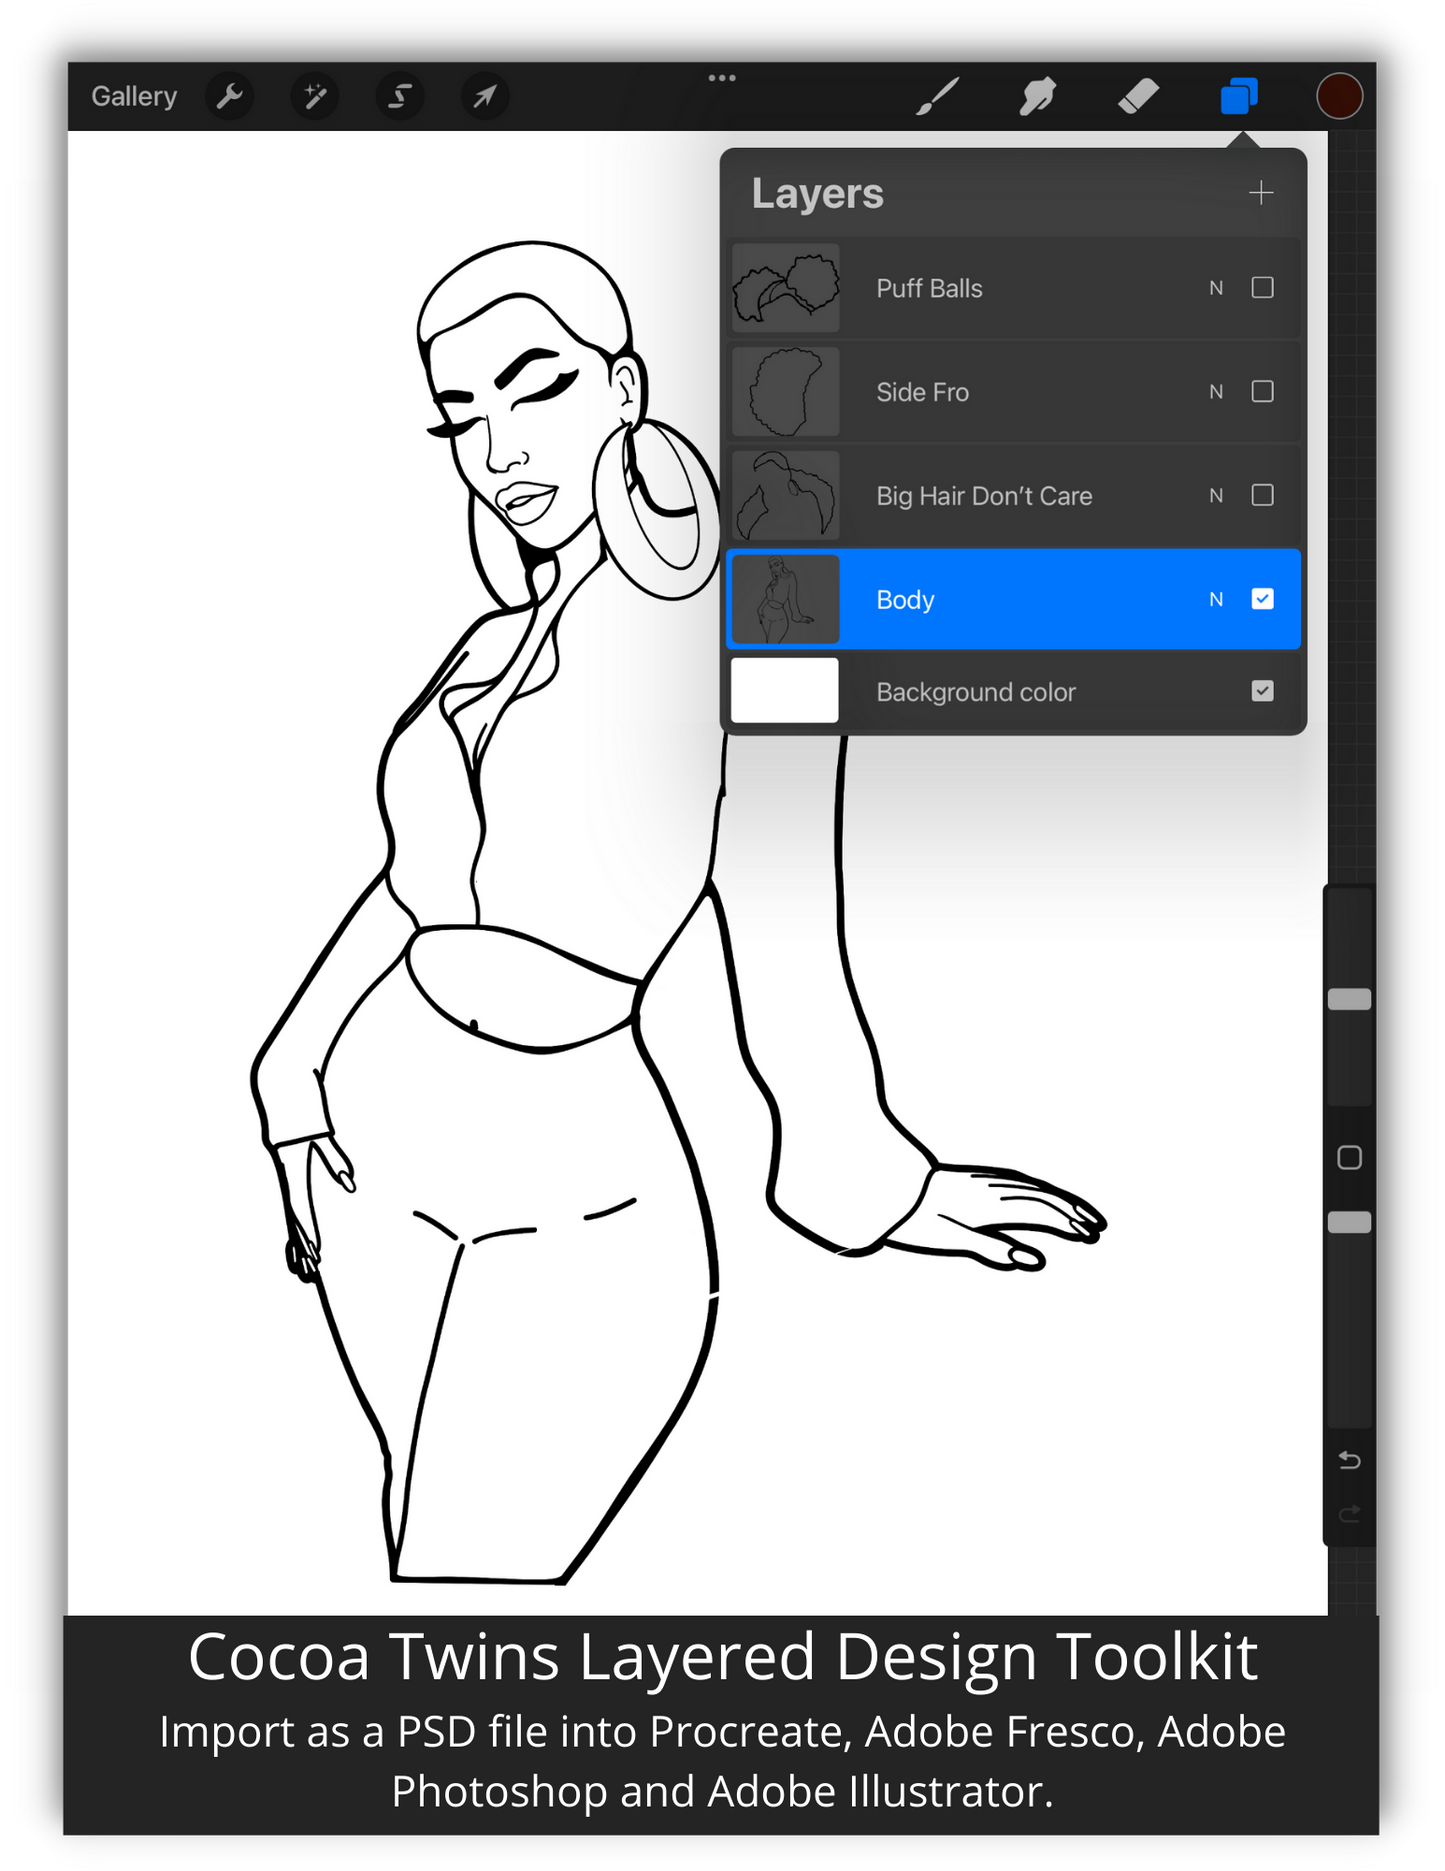 CTEX0222-03 | Layered Canvas Design Toolkit